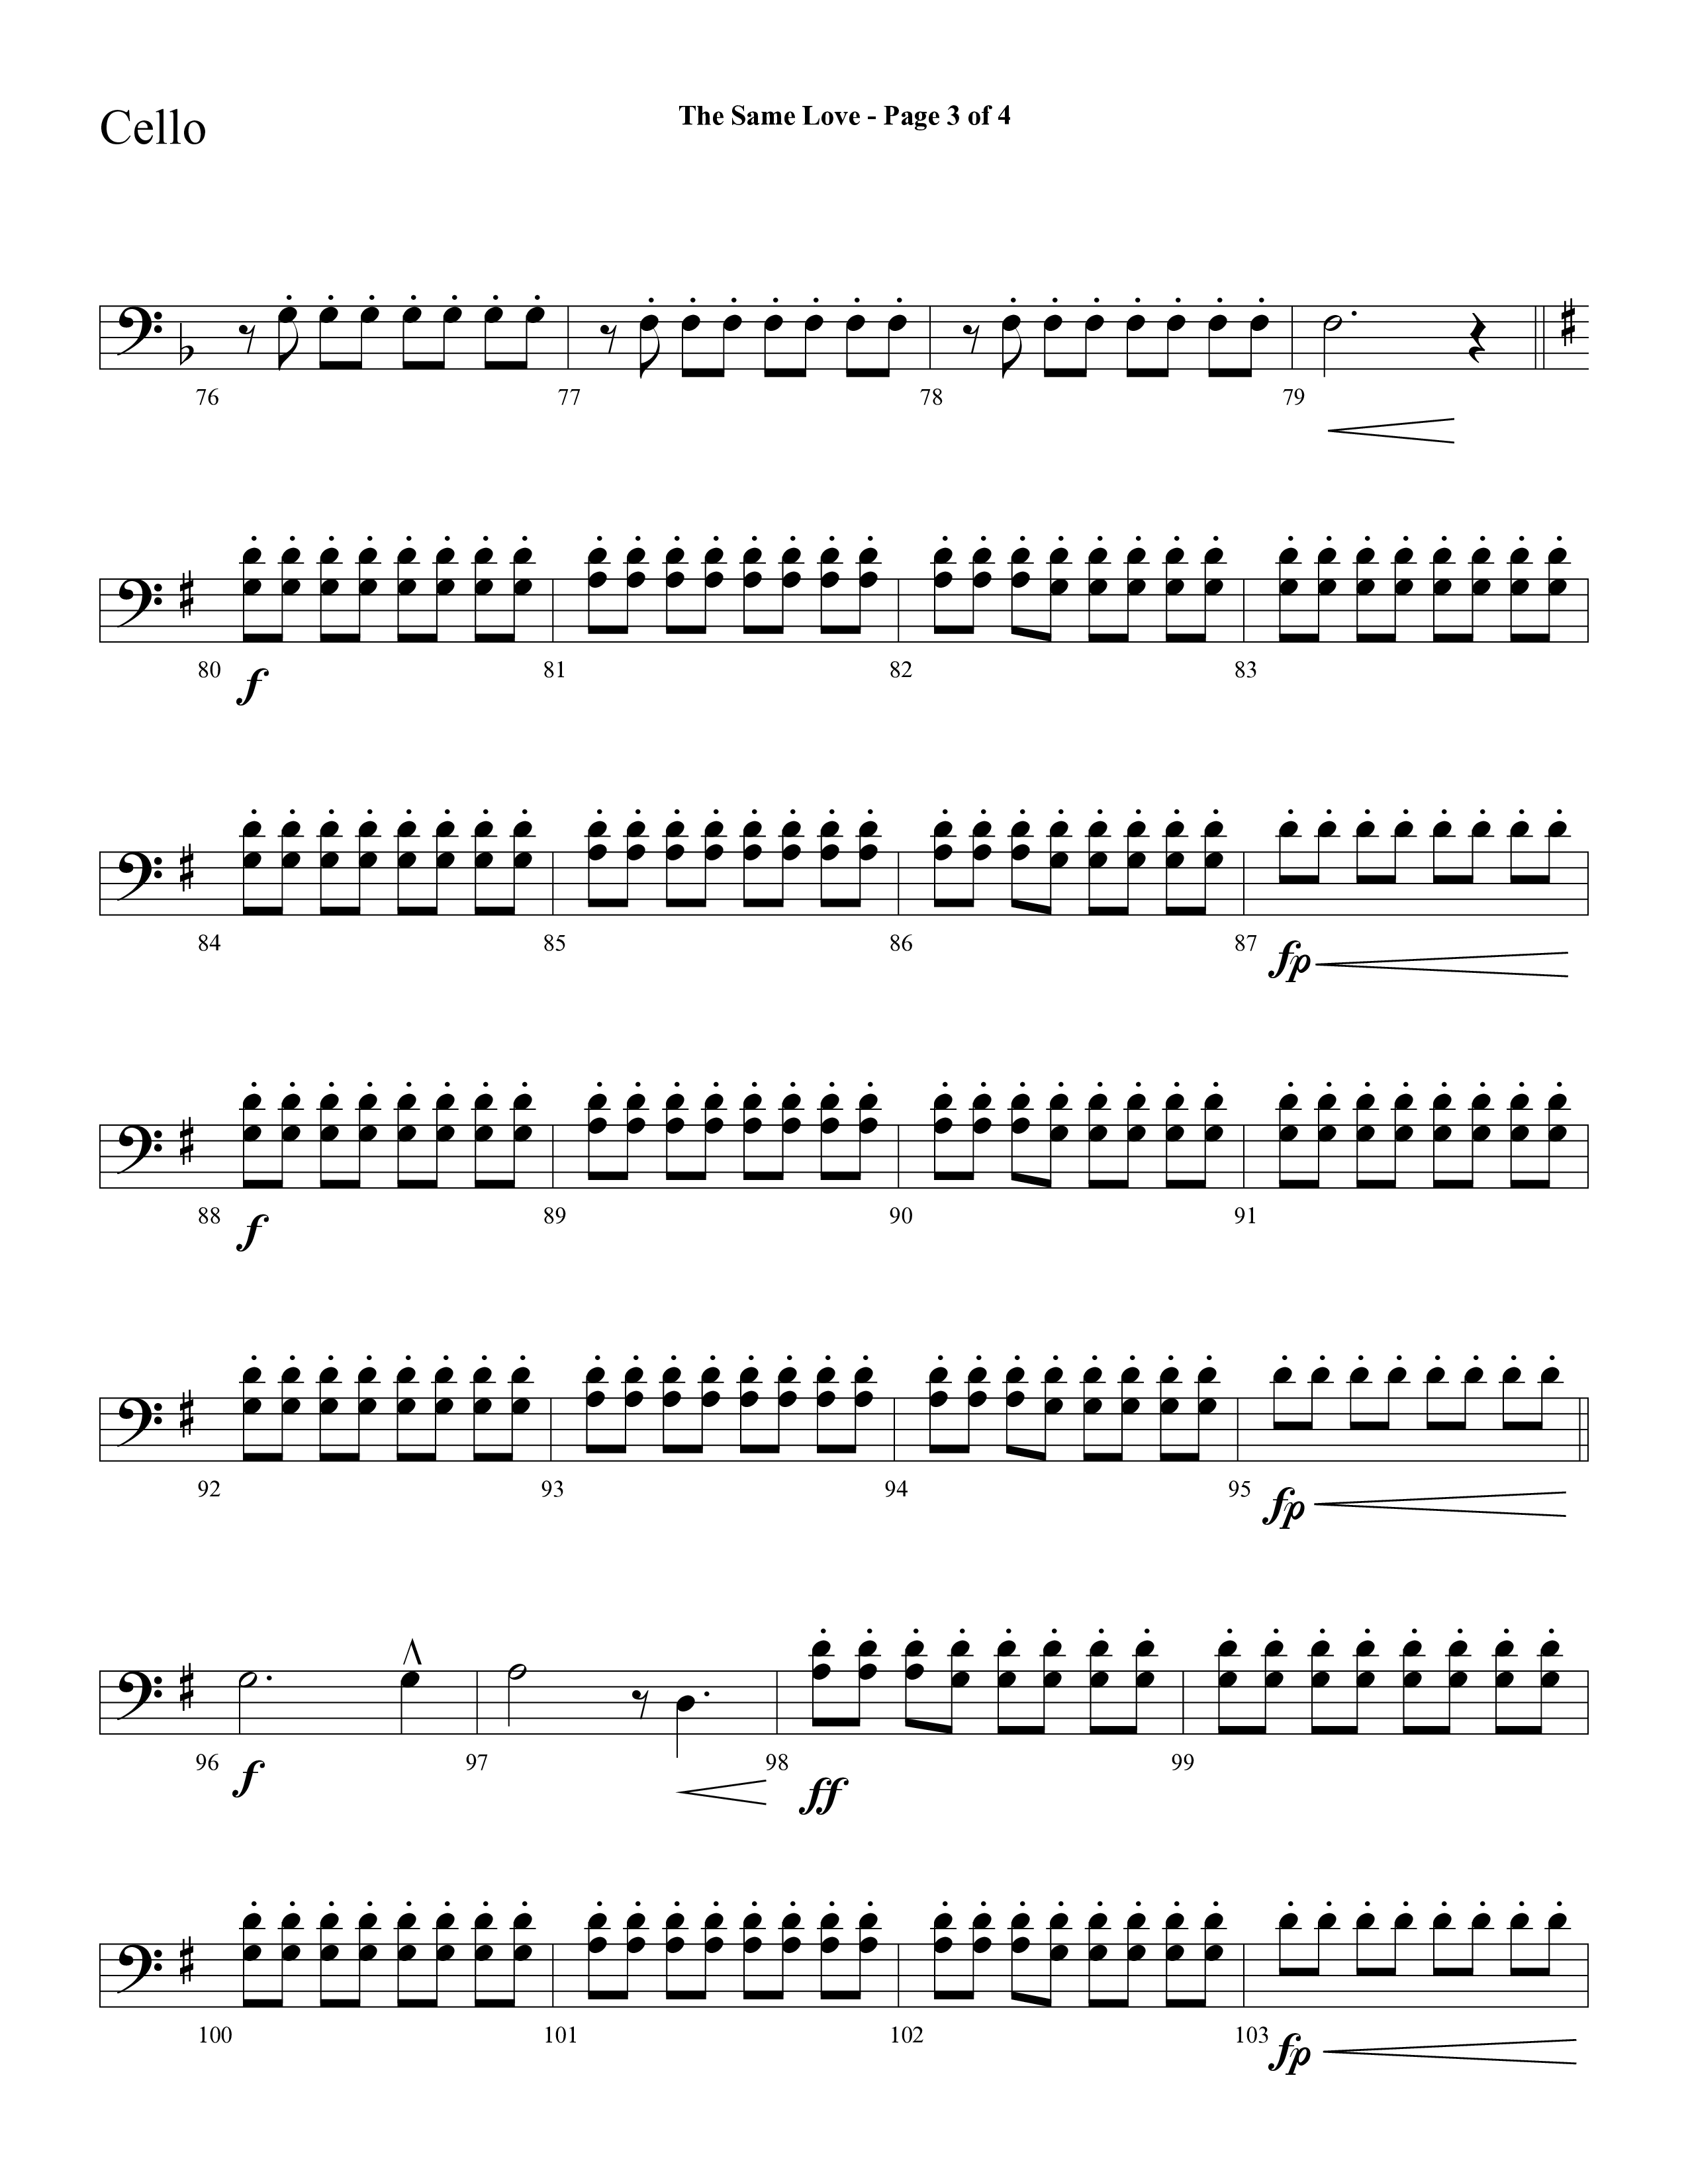 The Same Love (Choral Anthem SATB) Cello (Lifeway Choral / Arr. Cliff Duren)